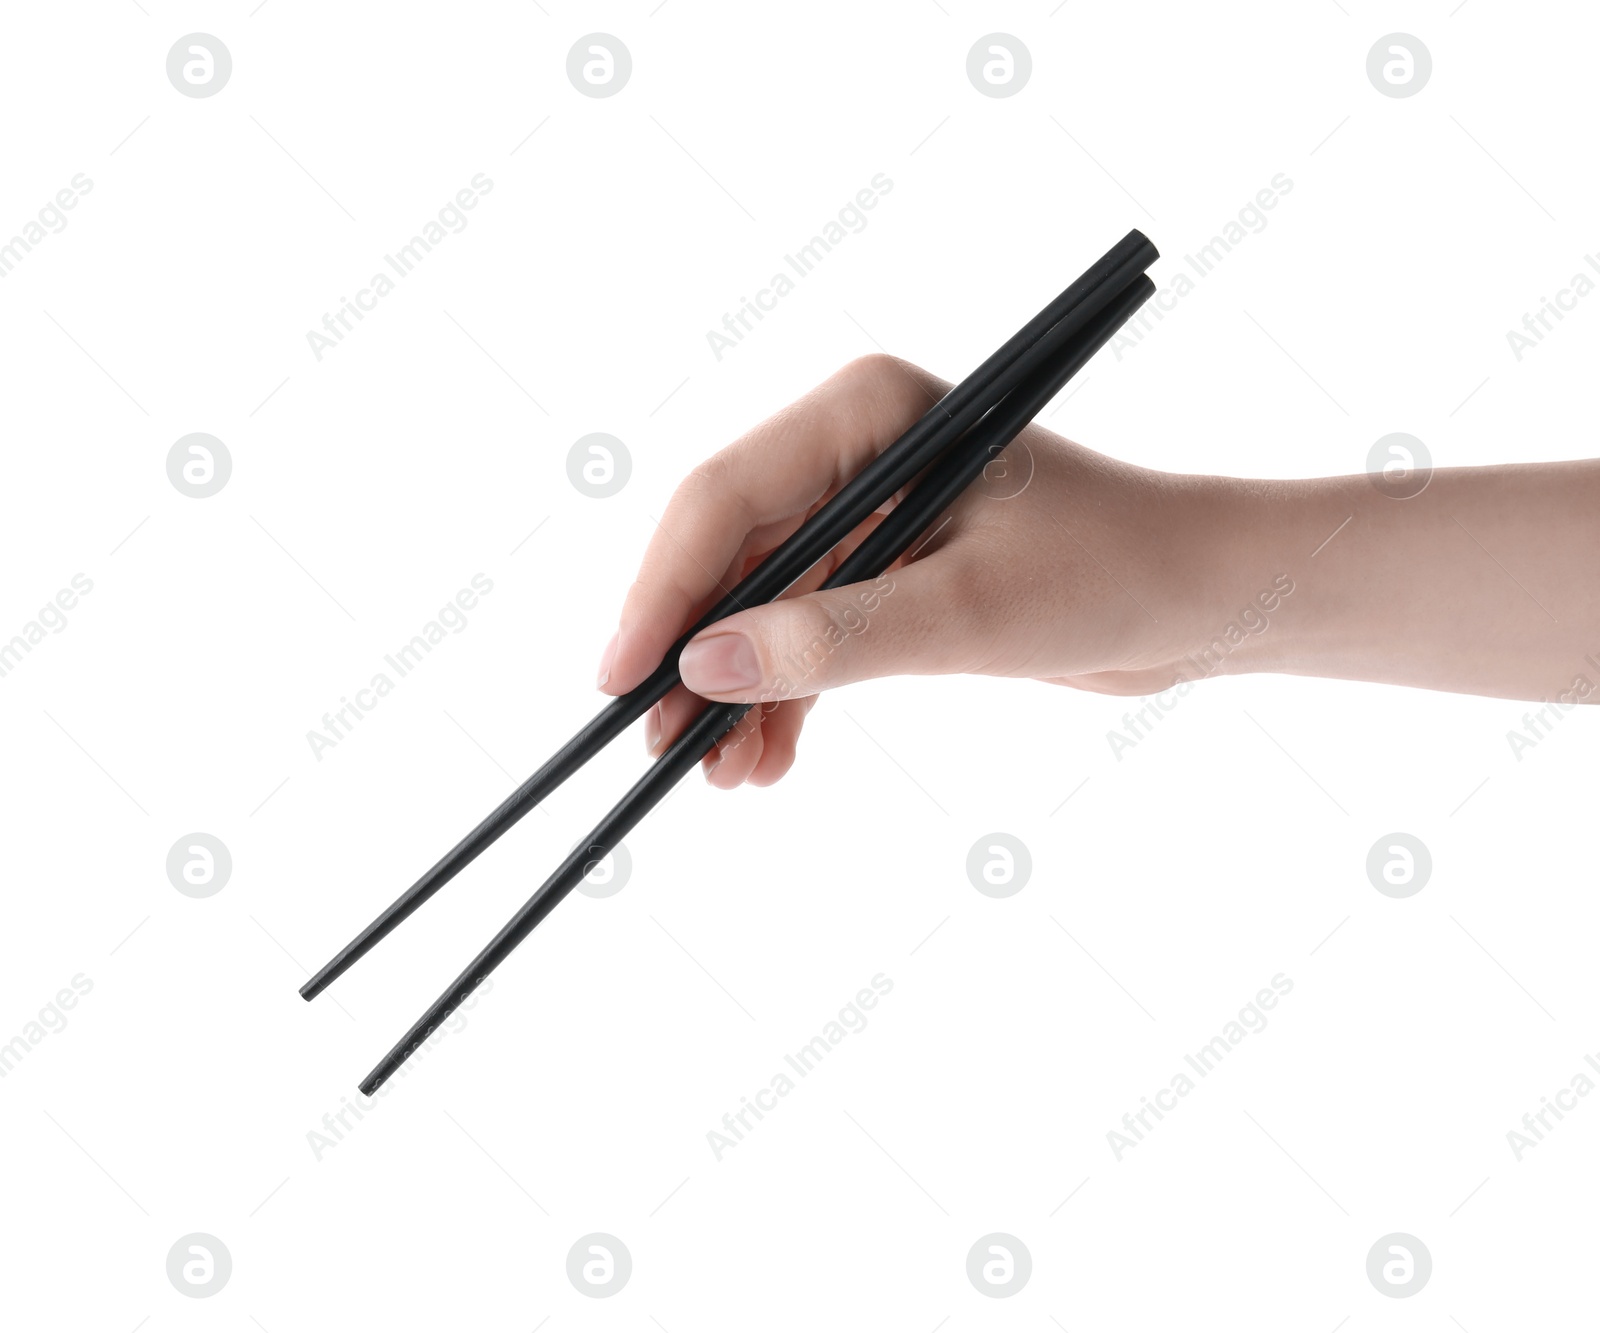 Photo of Woman holding pair of black chopsticks on white background, closeup